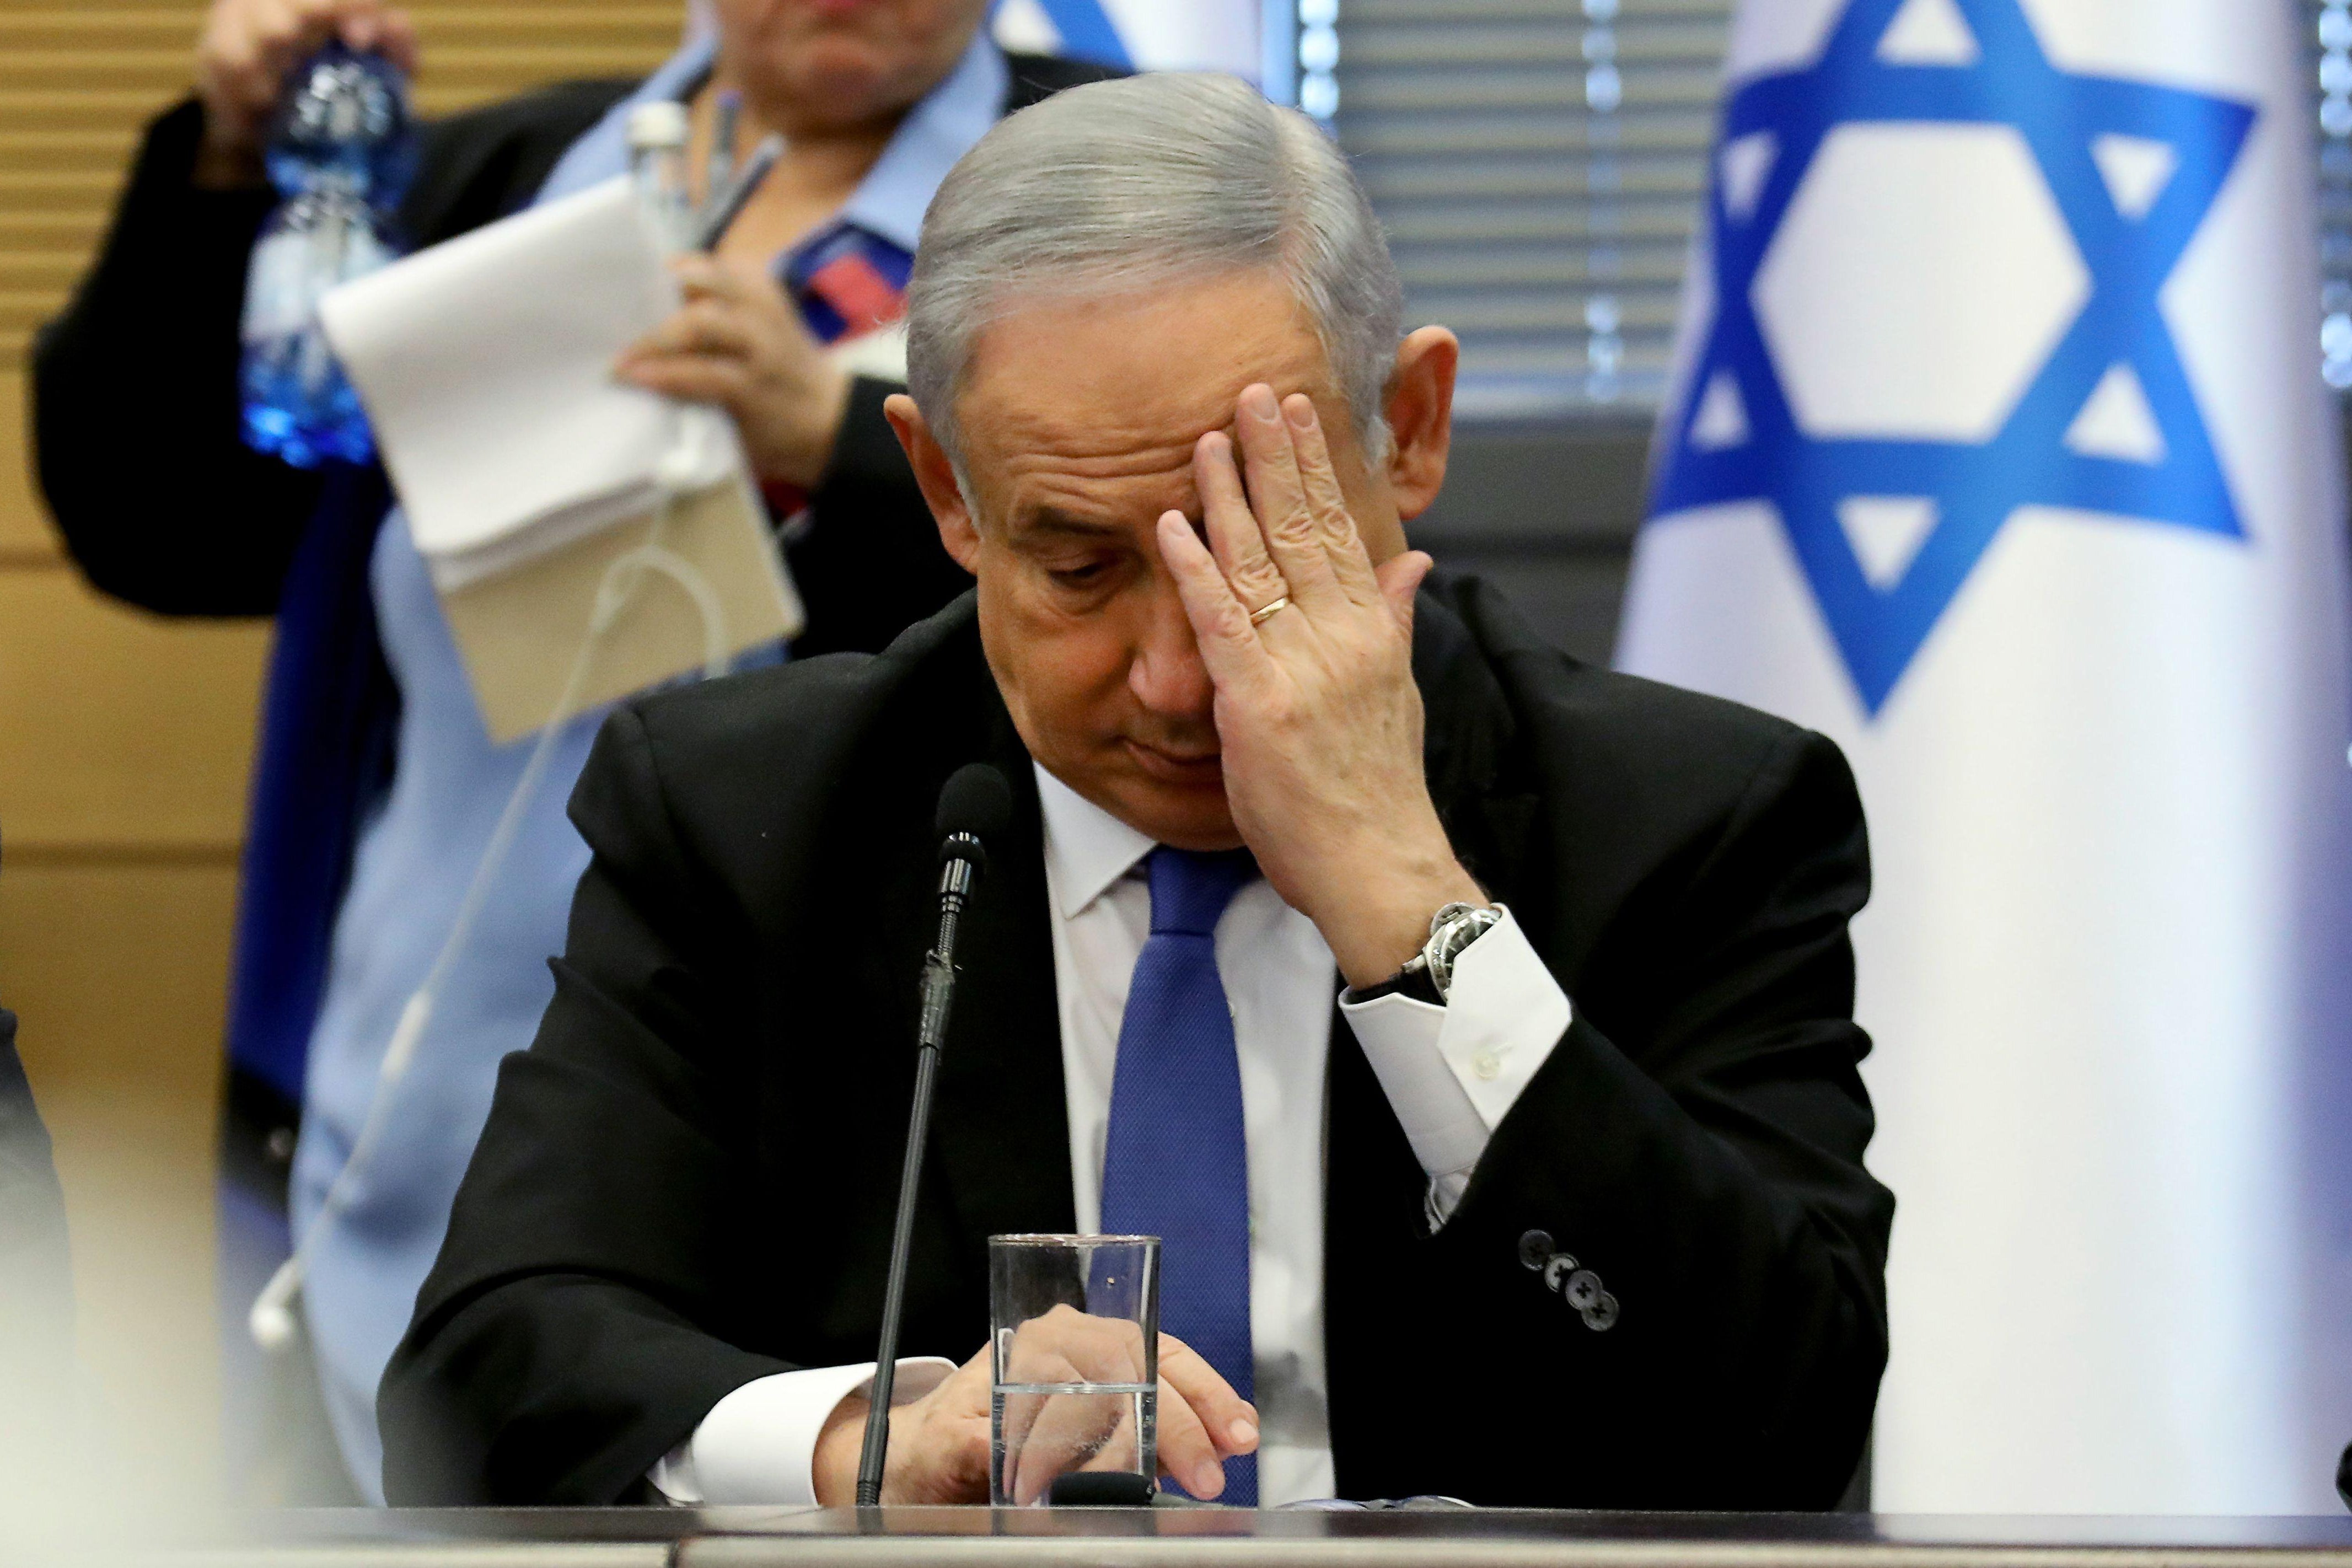 Israeli PM Benjamin Netanyahu won the legislative battle David Plotz, Emily Bazelon, and John Dickerson